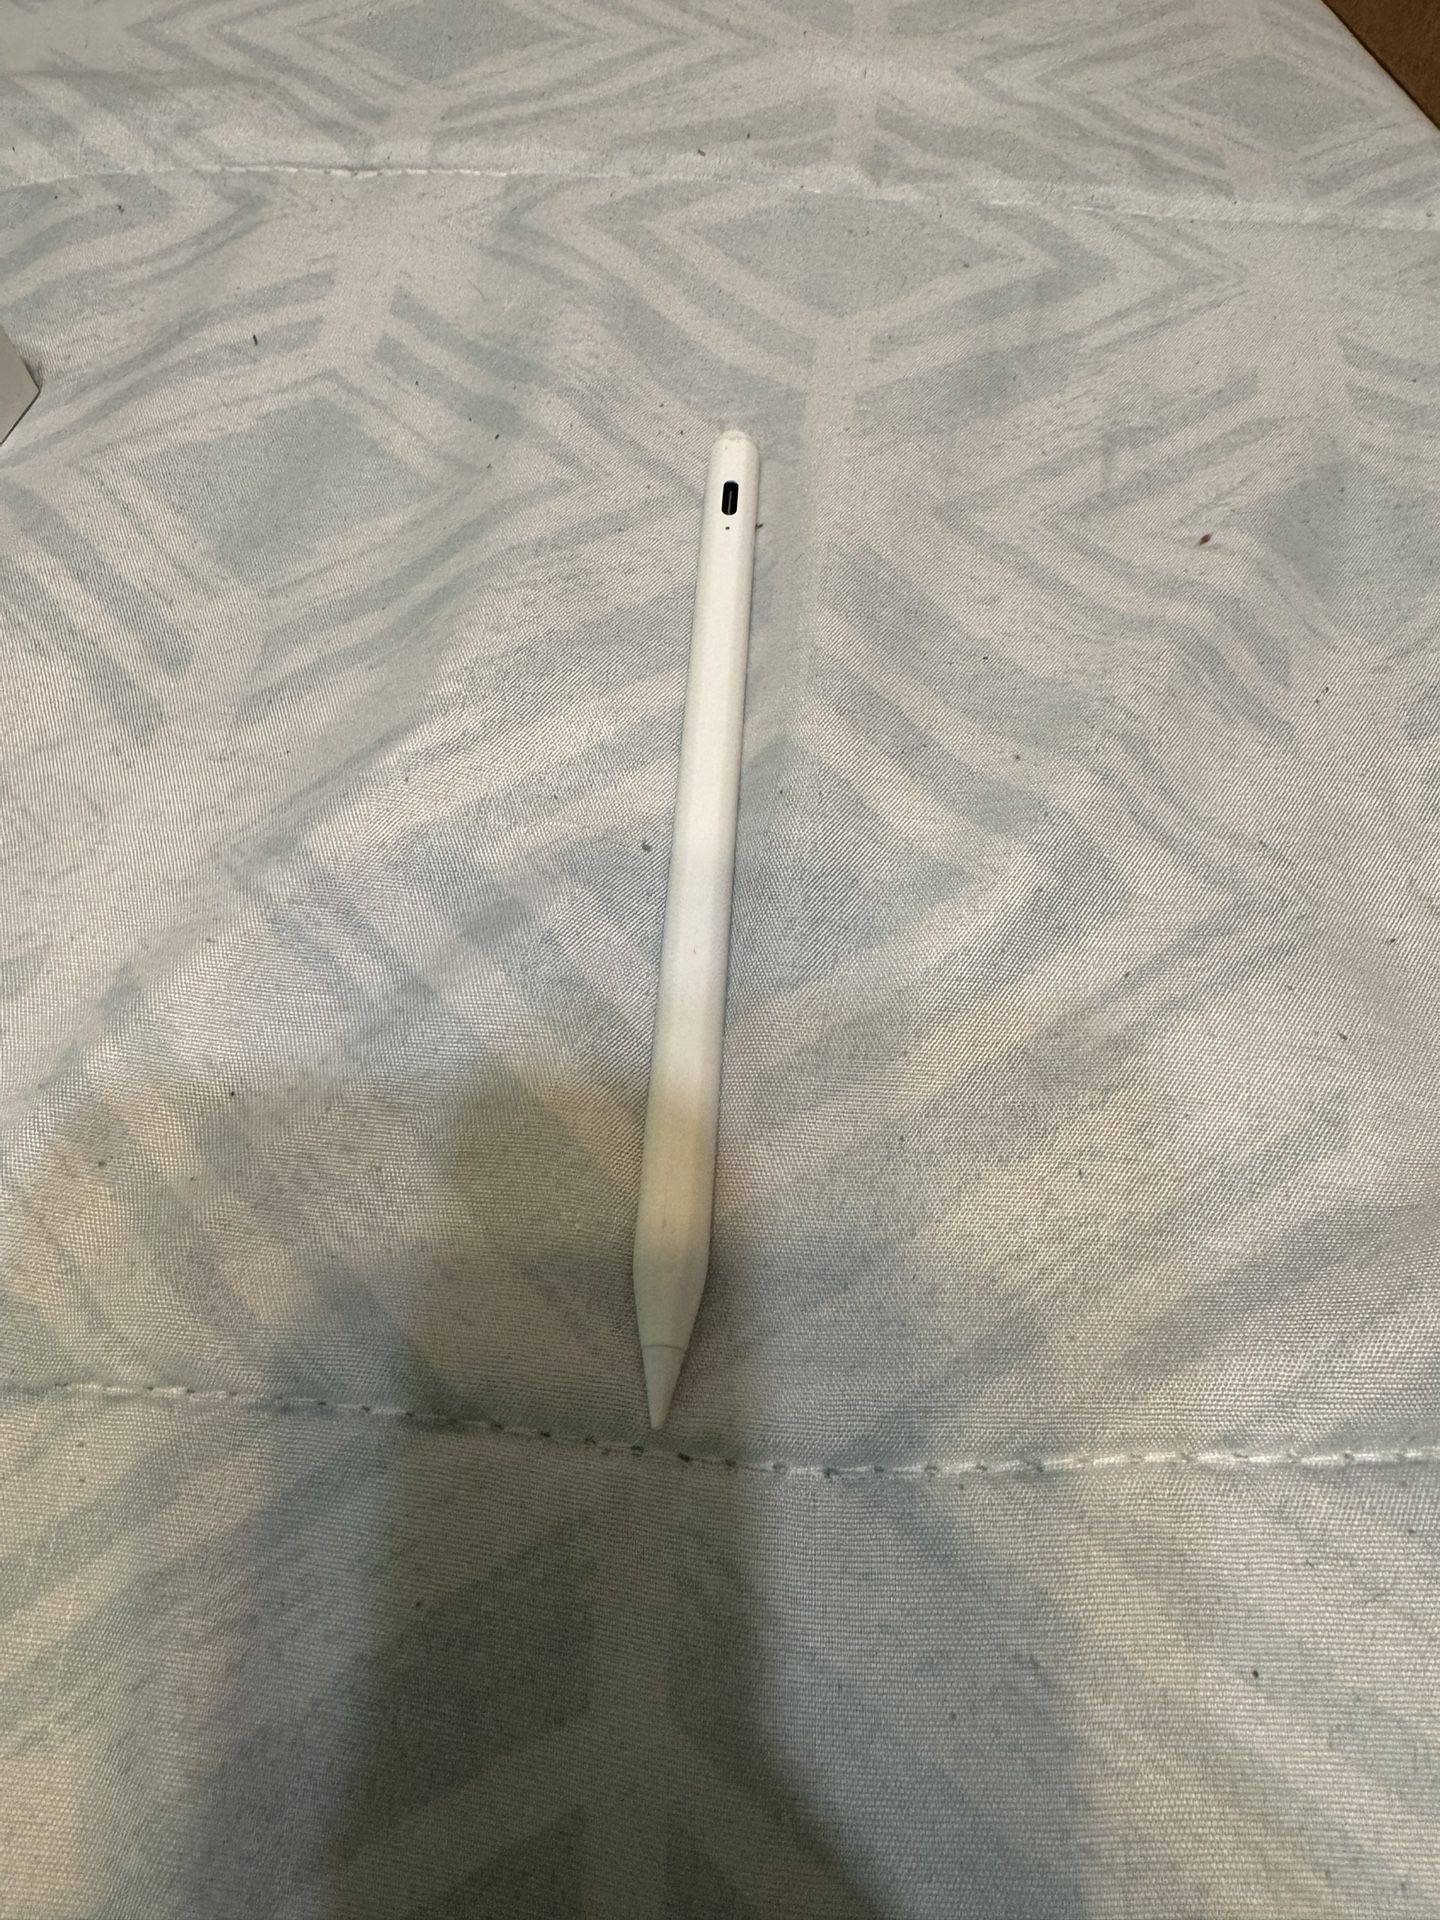 Apple Pencil Stylus Pen 2nd Generation for iPad/iPad Air/iPad Pro/iPad mini